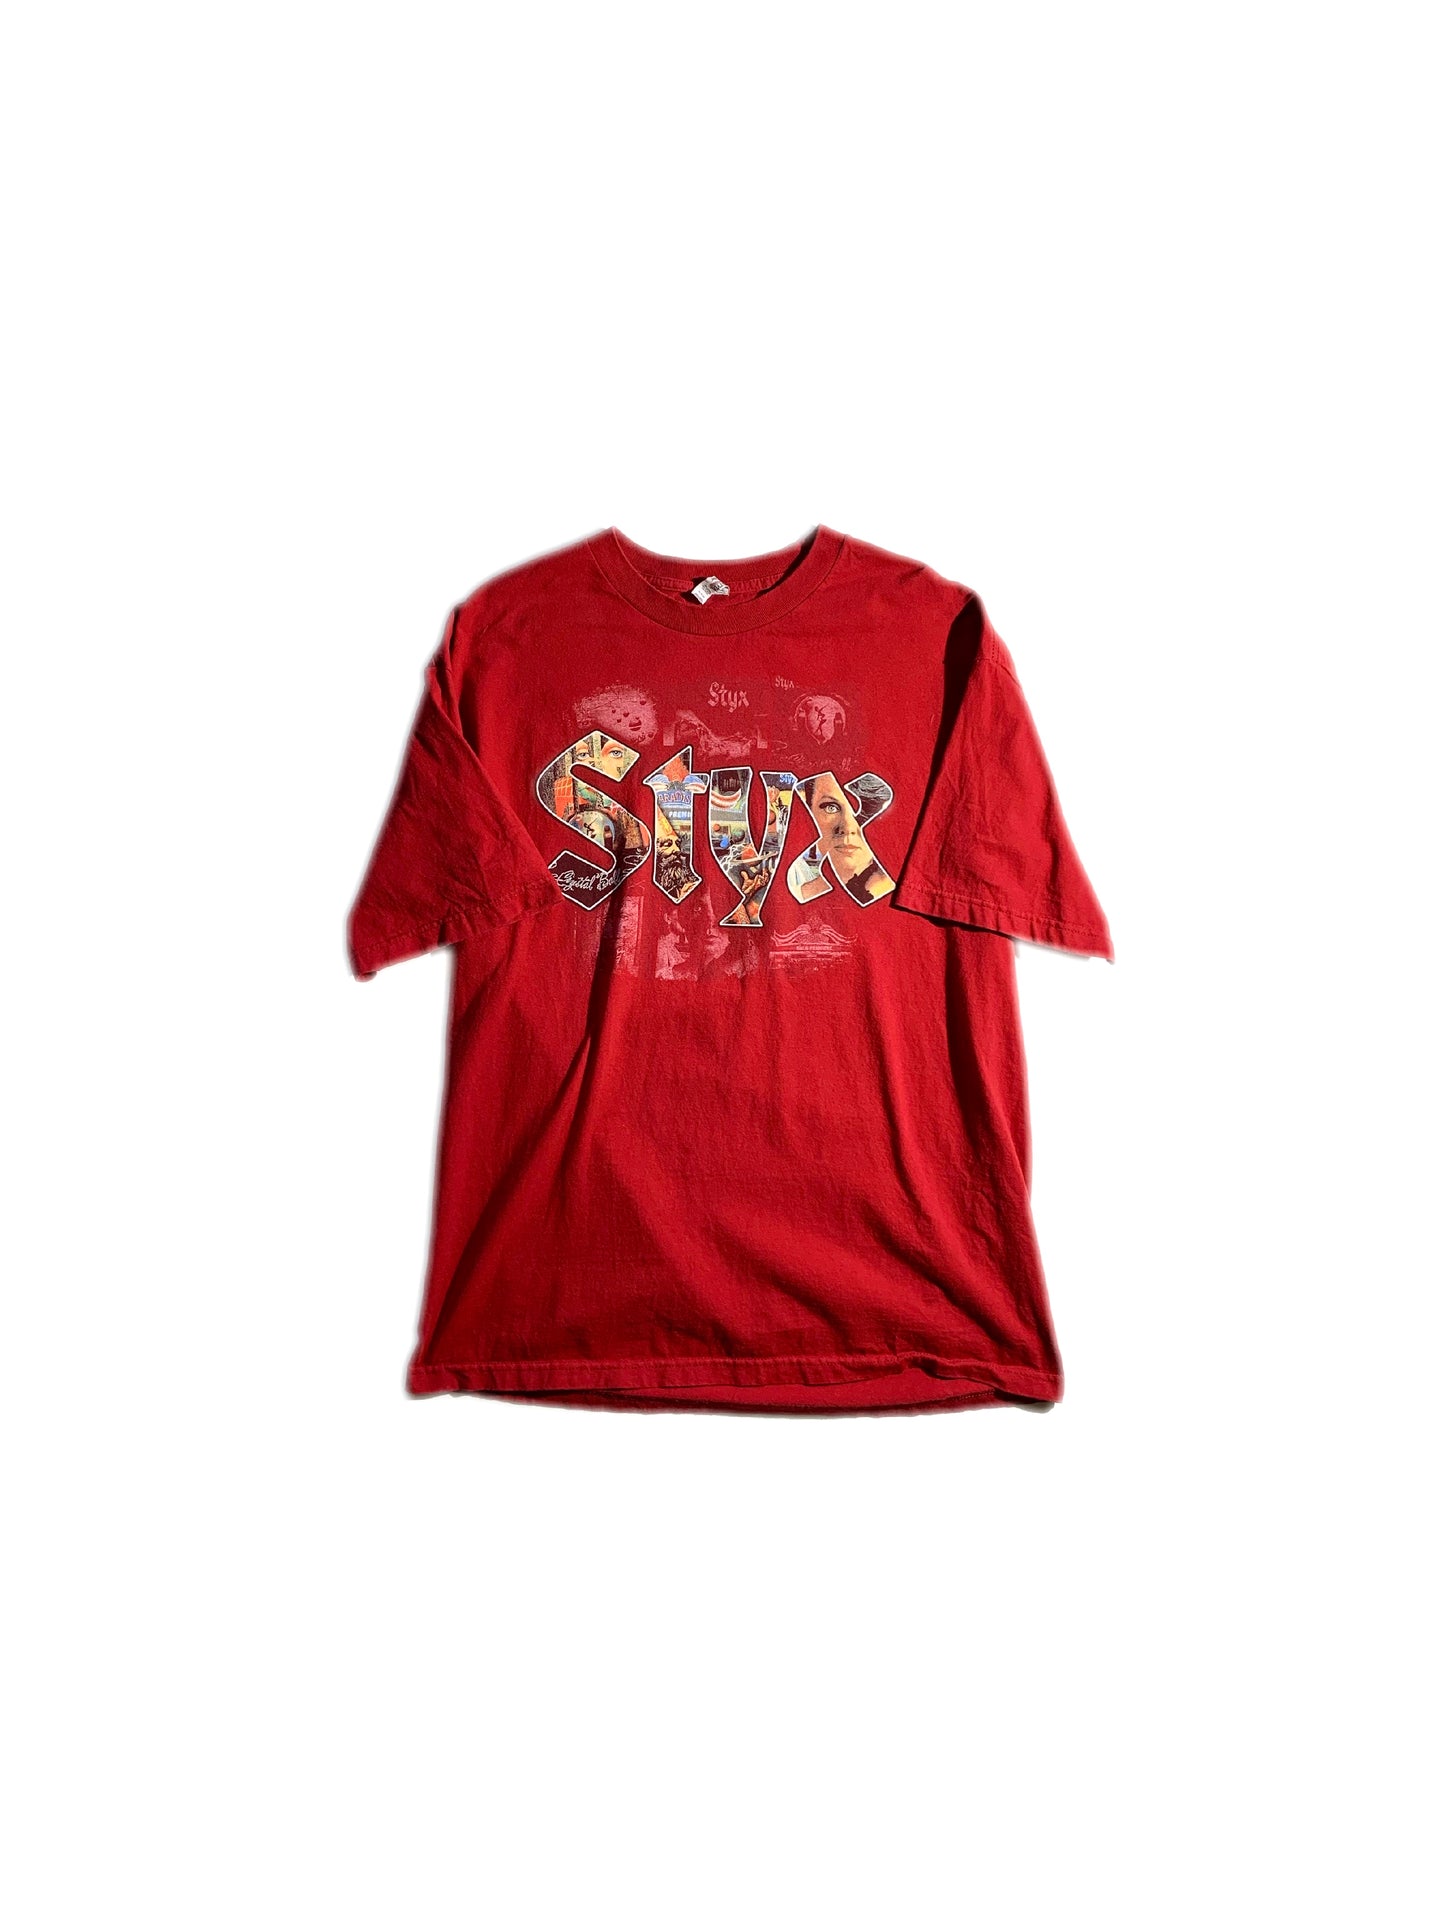 Vintage Styx T-Shirt